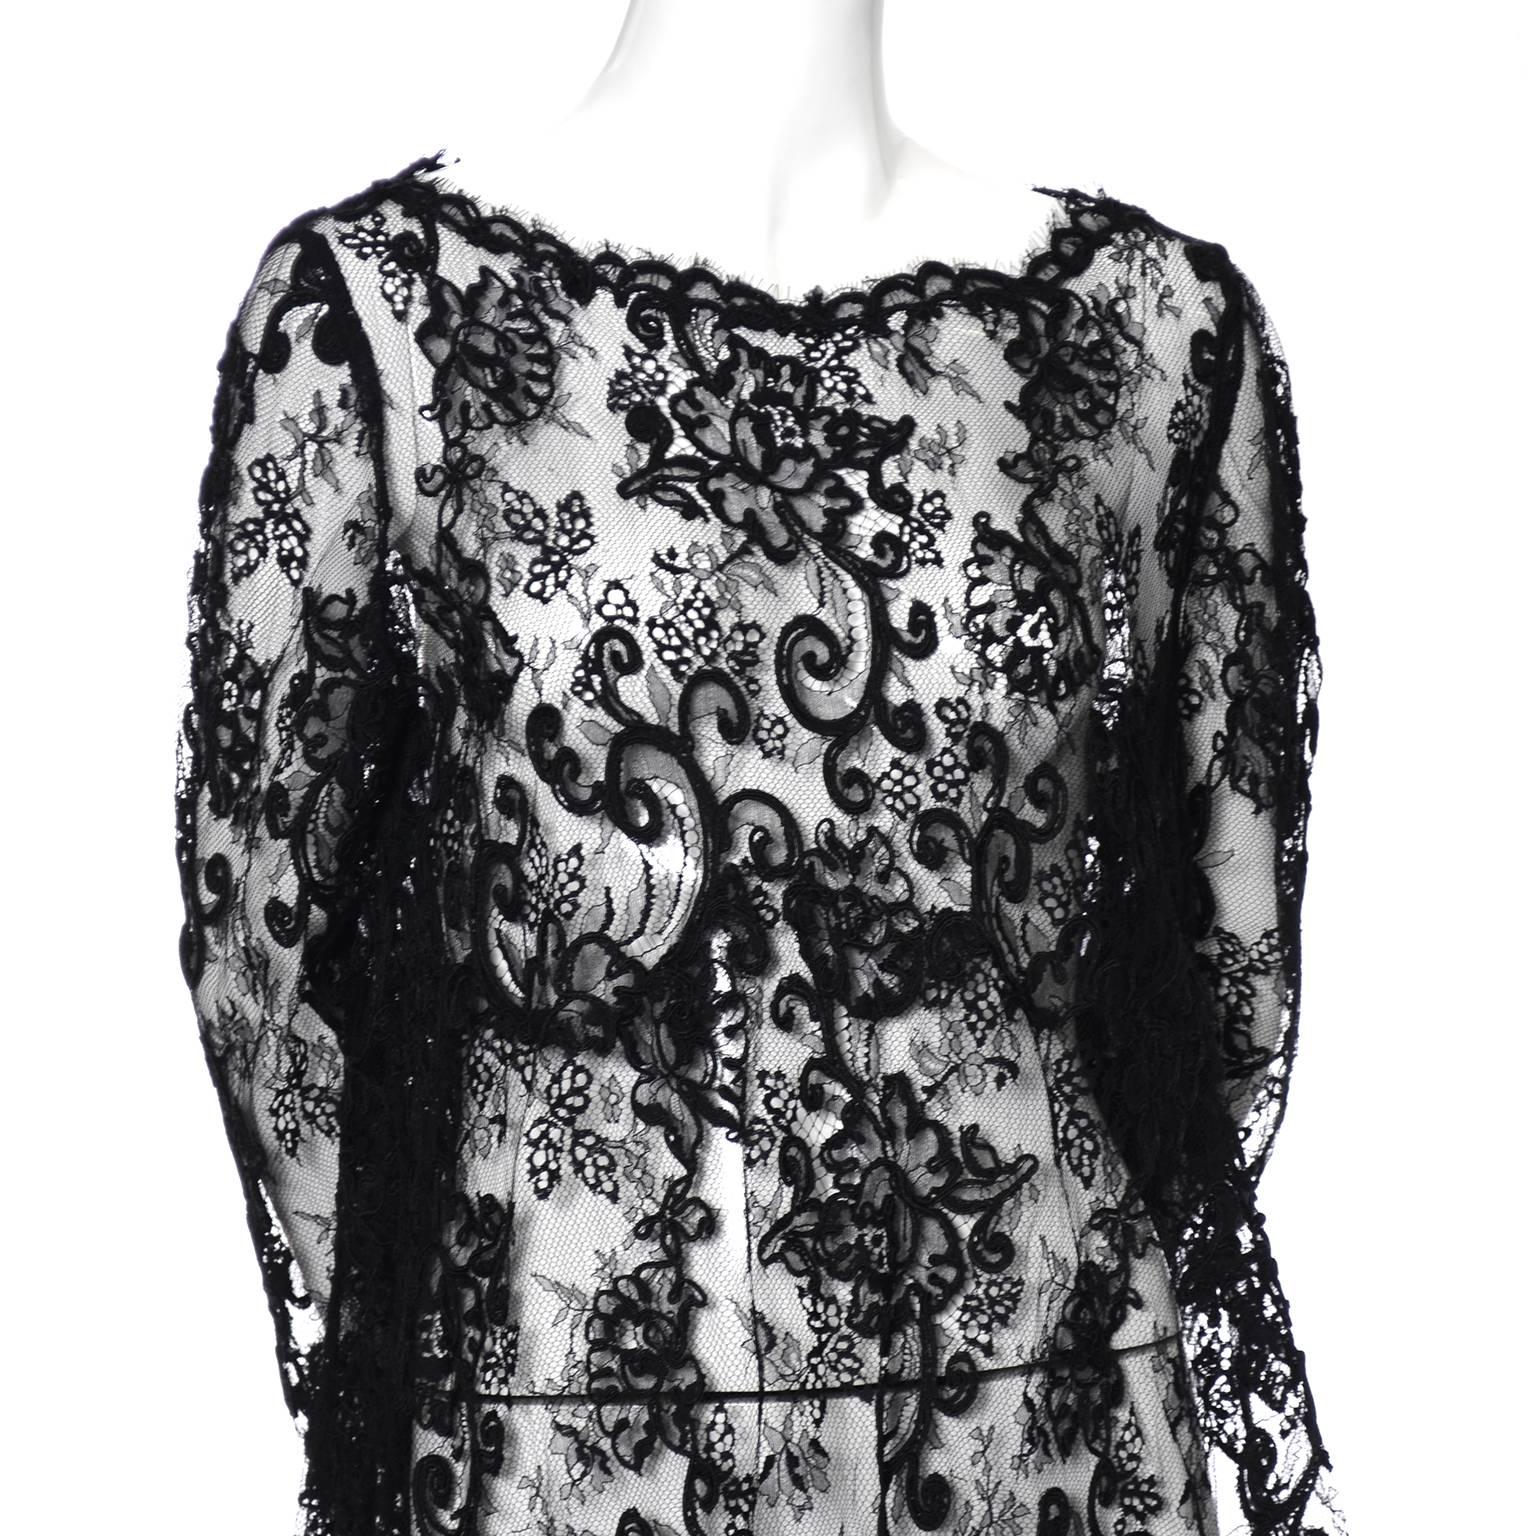 All Lace Oscar de la Renta Dress Black Evening Vintage Trapeze Dress 2